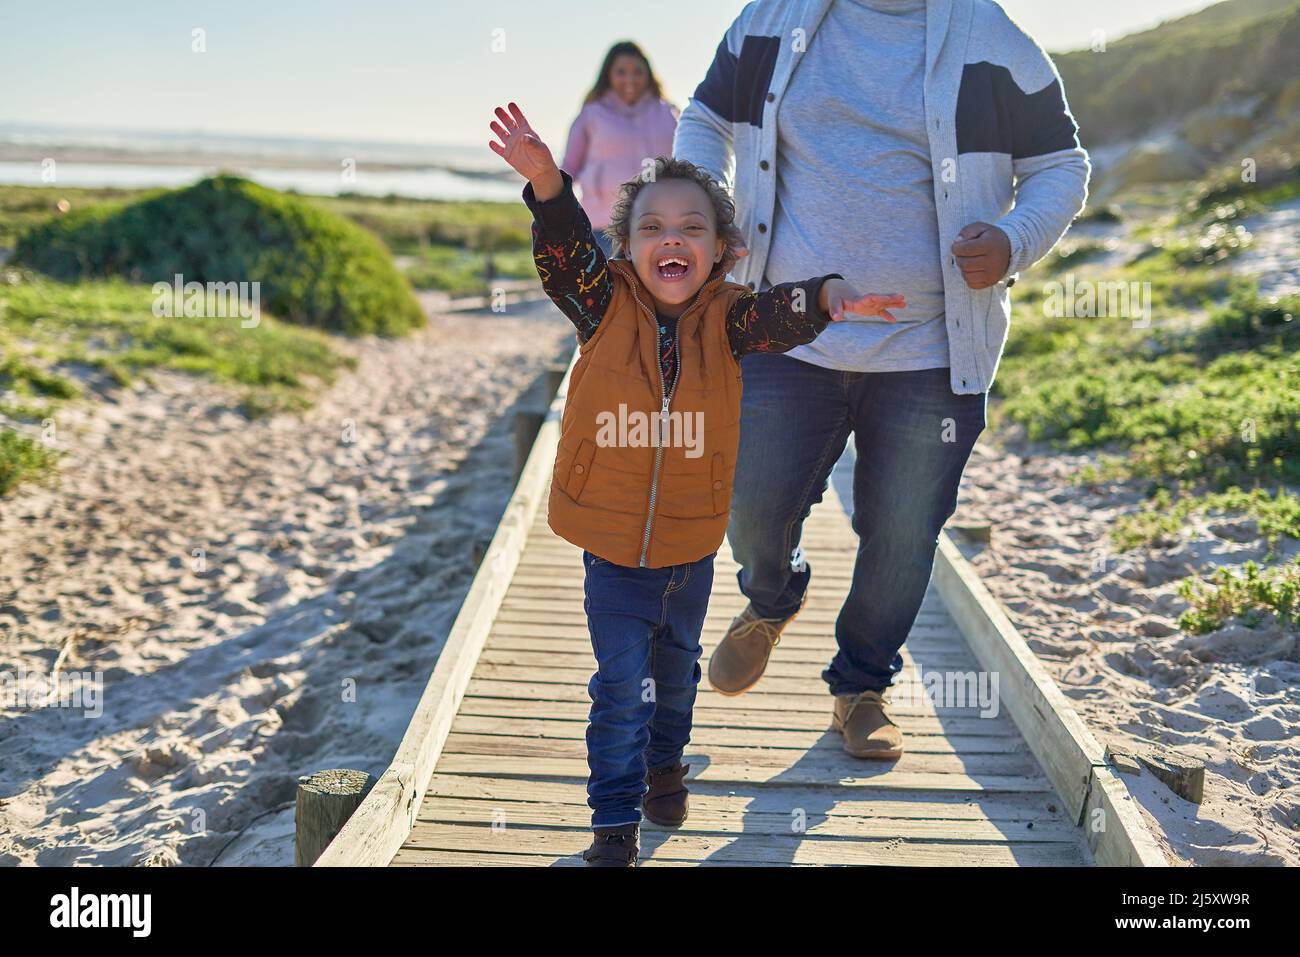 Happy, exuberant boy with Down Syndrome on beach boardwalk Stock Photo